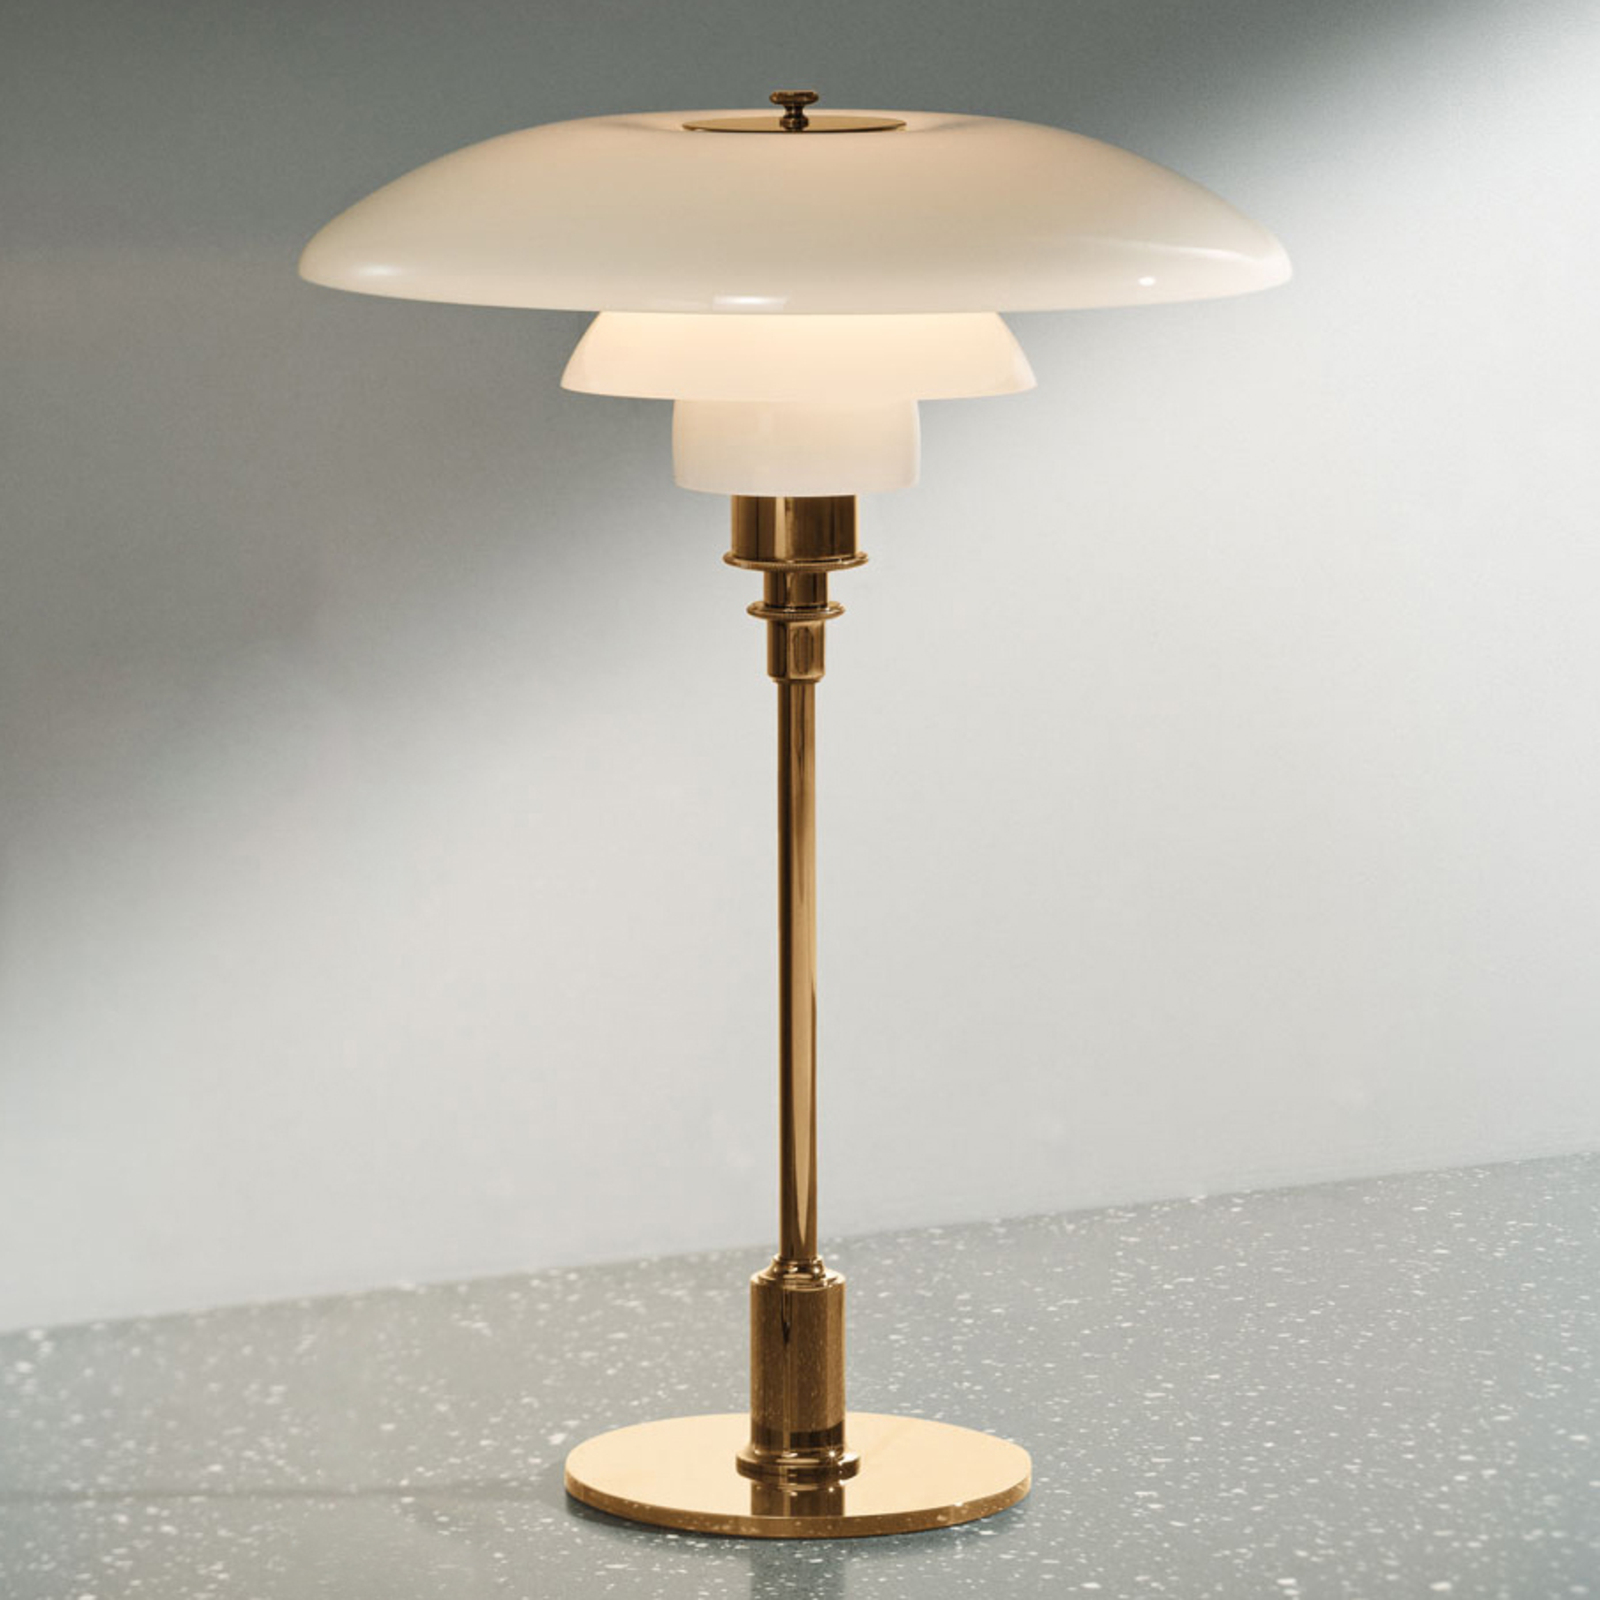 Louis Poulsen Ph 3 1 2 Table Lamp, Ph 2 1 Table Lamp Brass